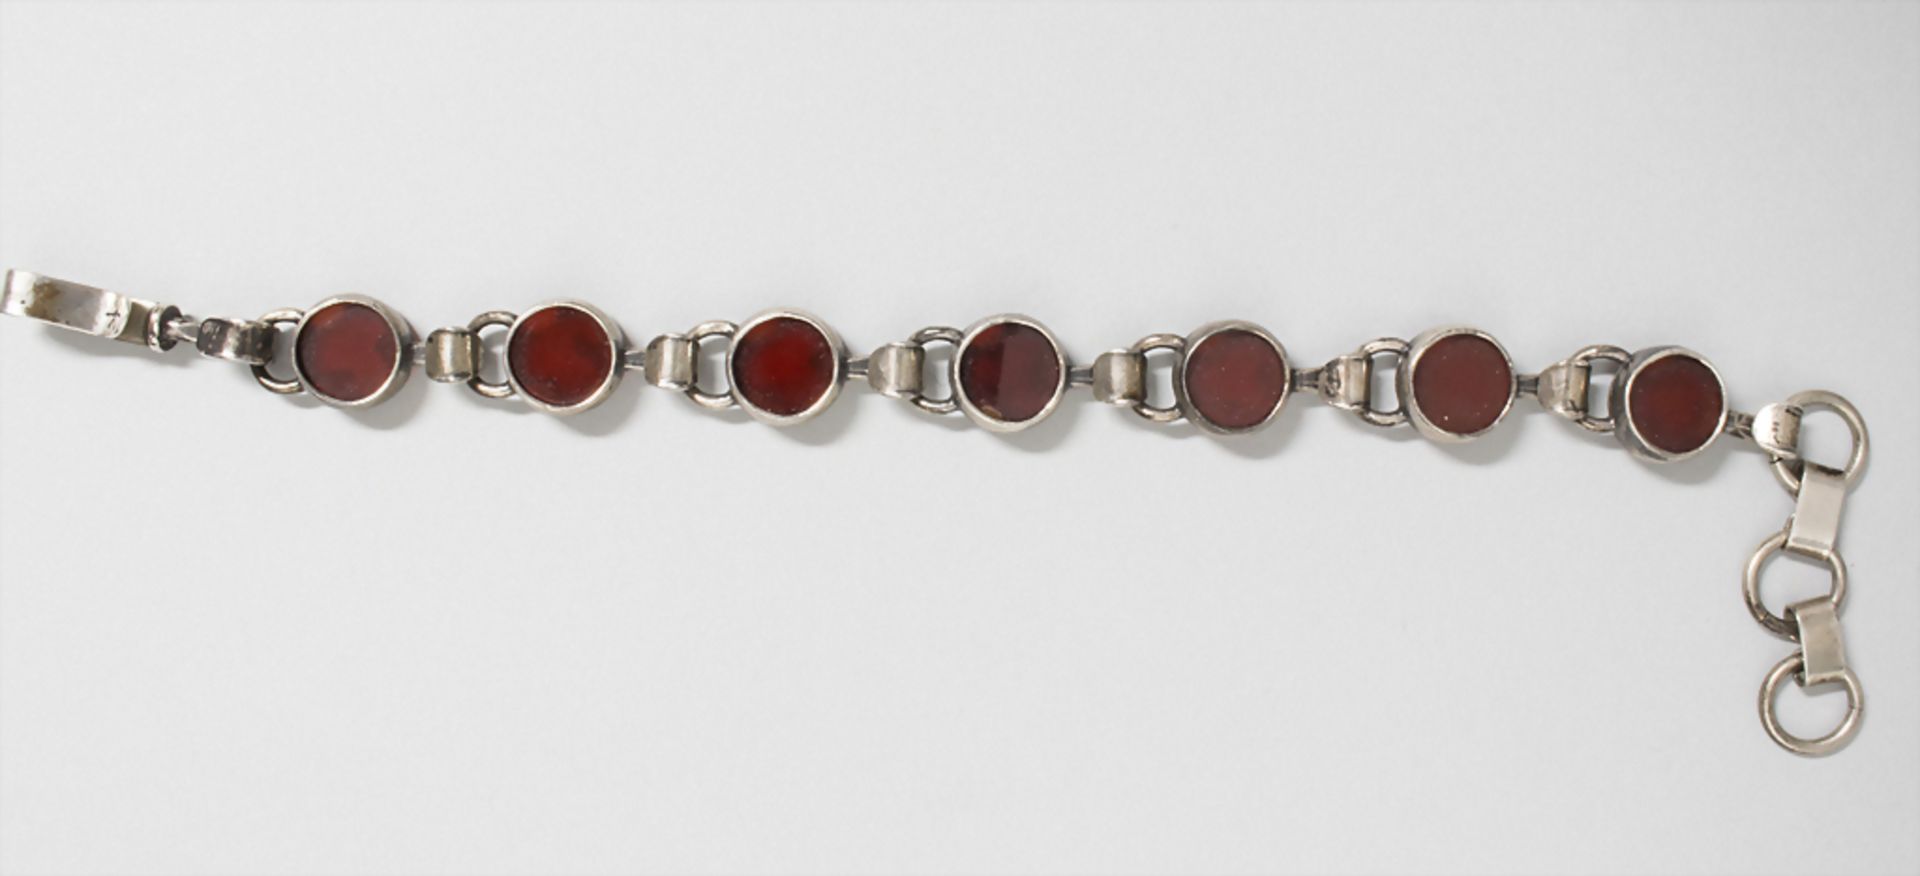 Armband in Silber / A silver bracelet, um 1970 - Bild 2 aus 3